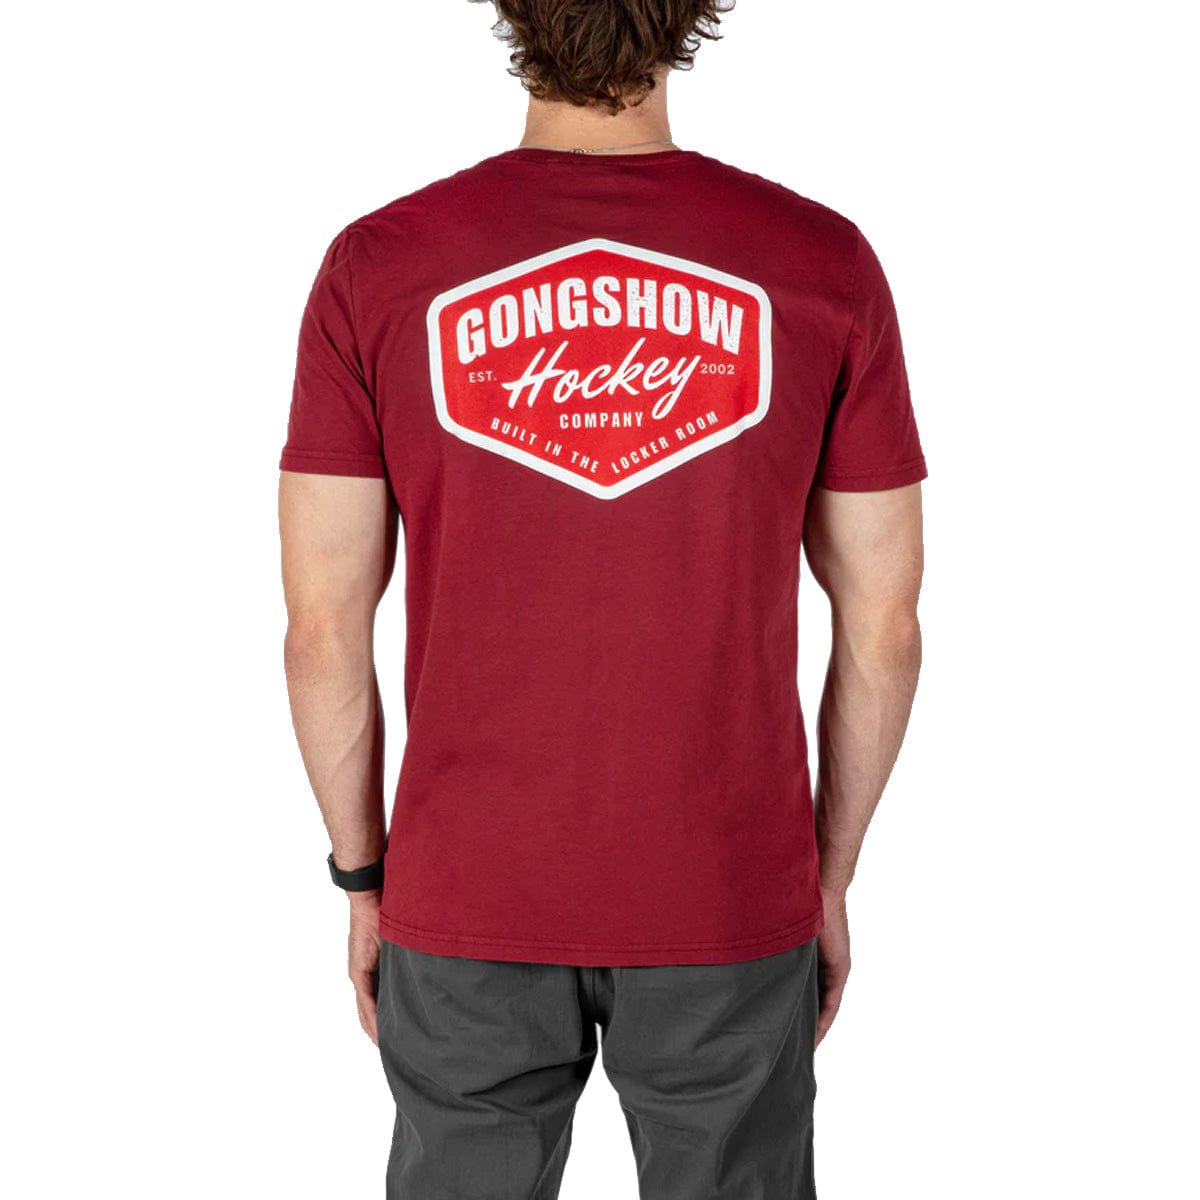 Gongshow Hockey Set the Standard Mens Shortsleeve Shirt - The Hockey Shop Source For Sports